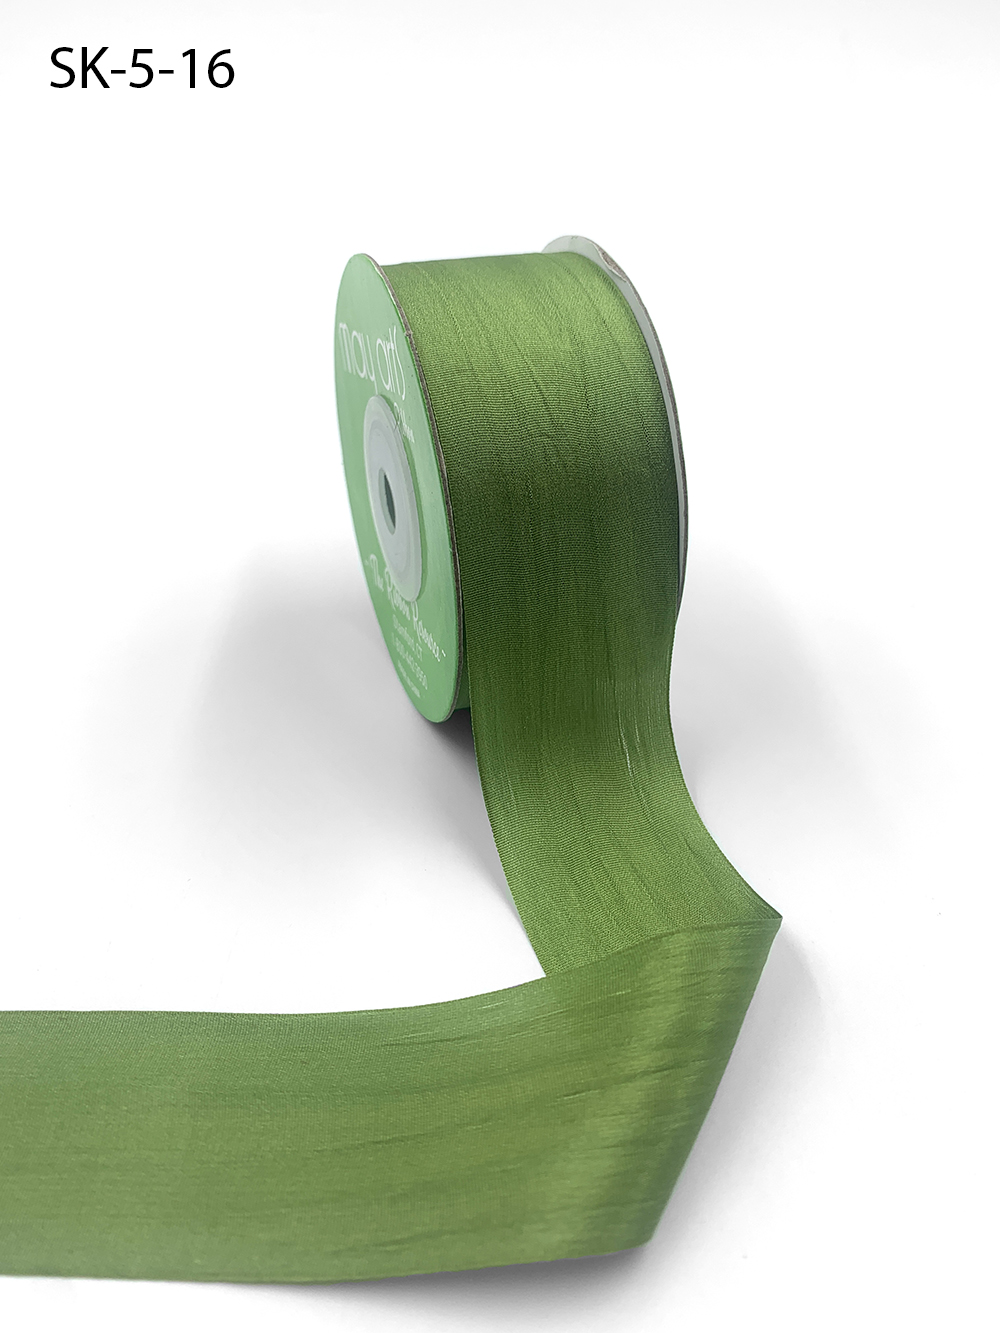 Olive Linen Ribbon - 1.5 Wide Online Ribbon - May Arts